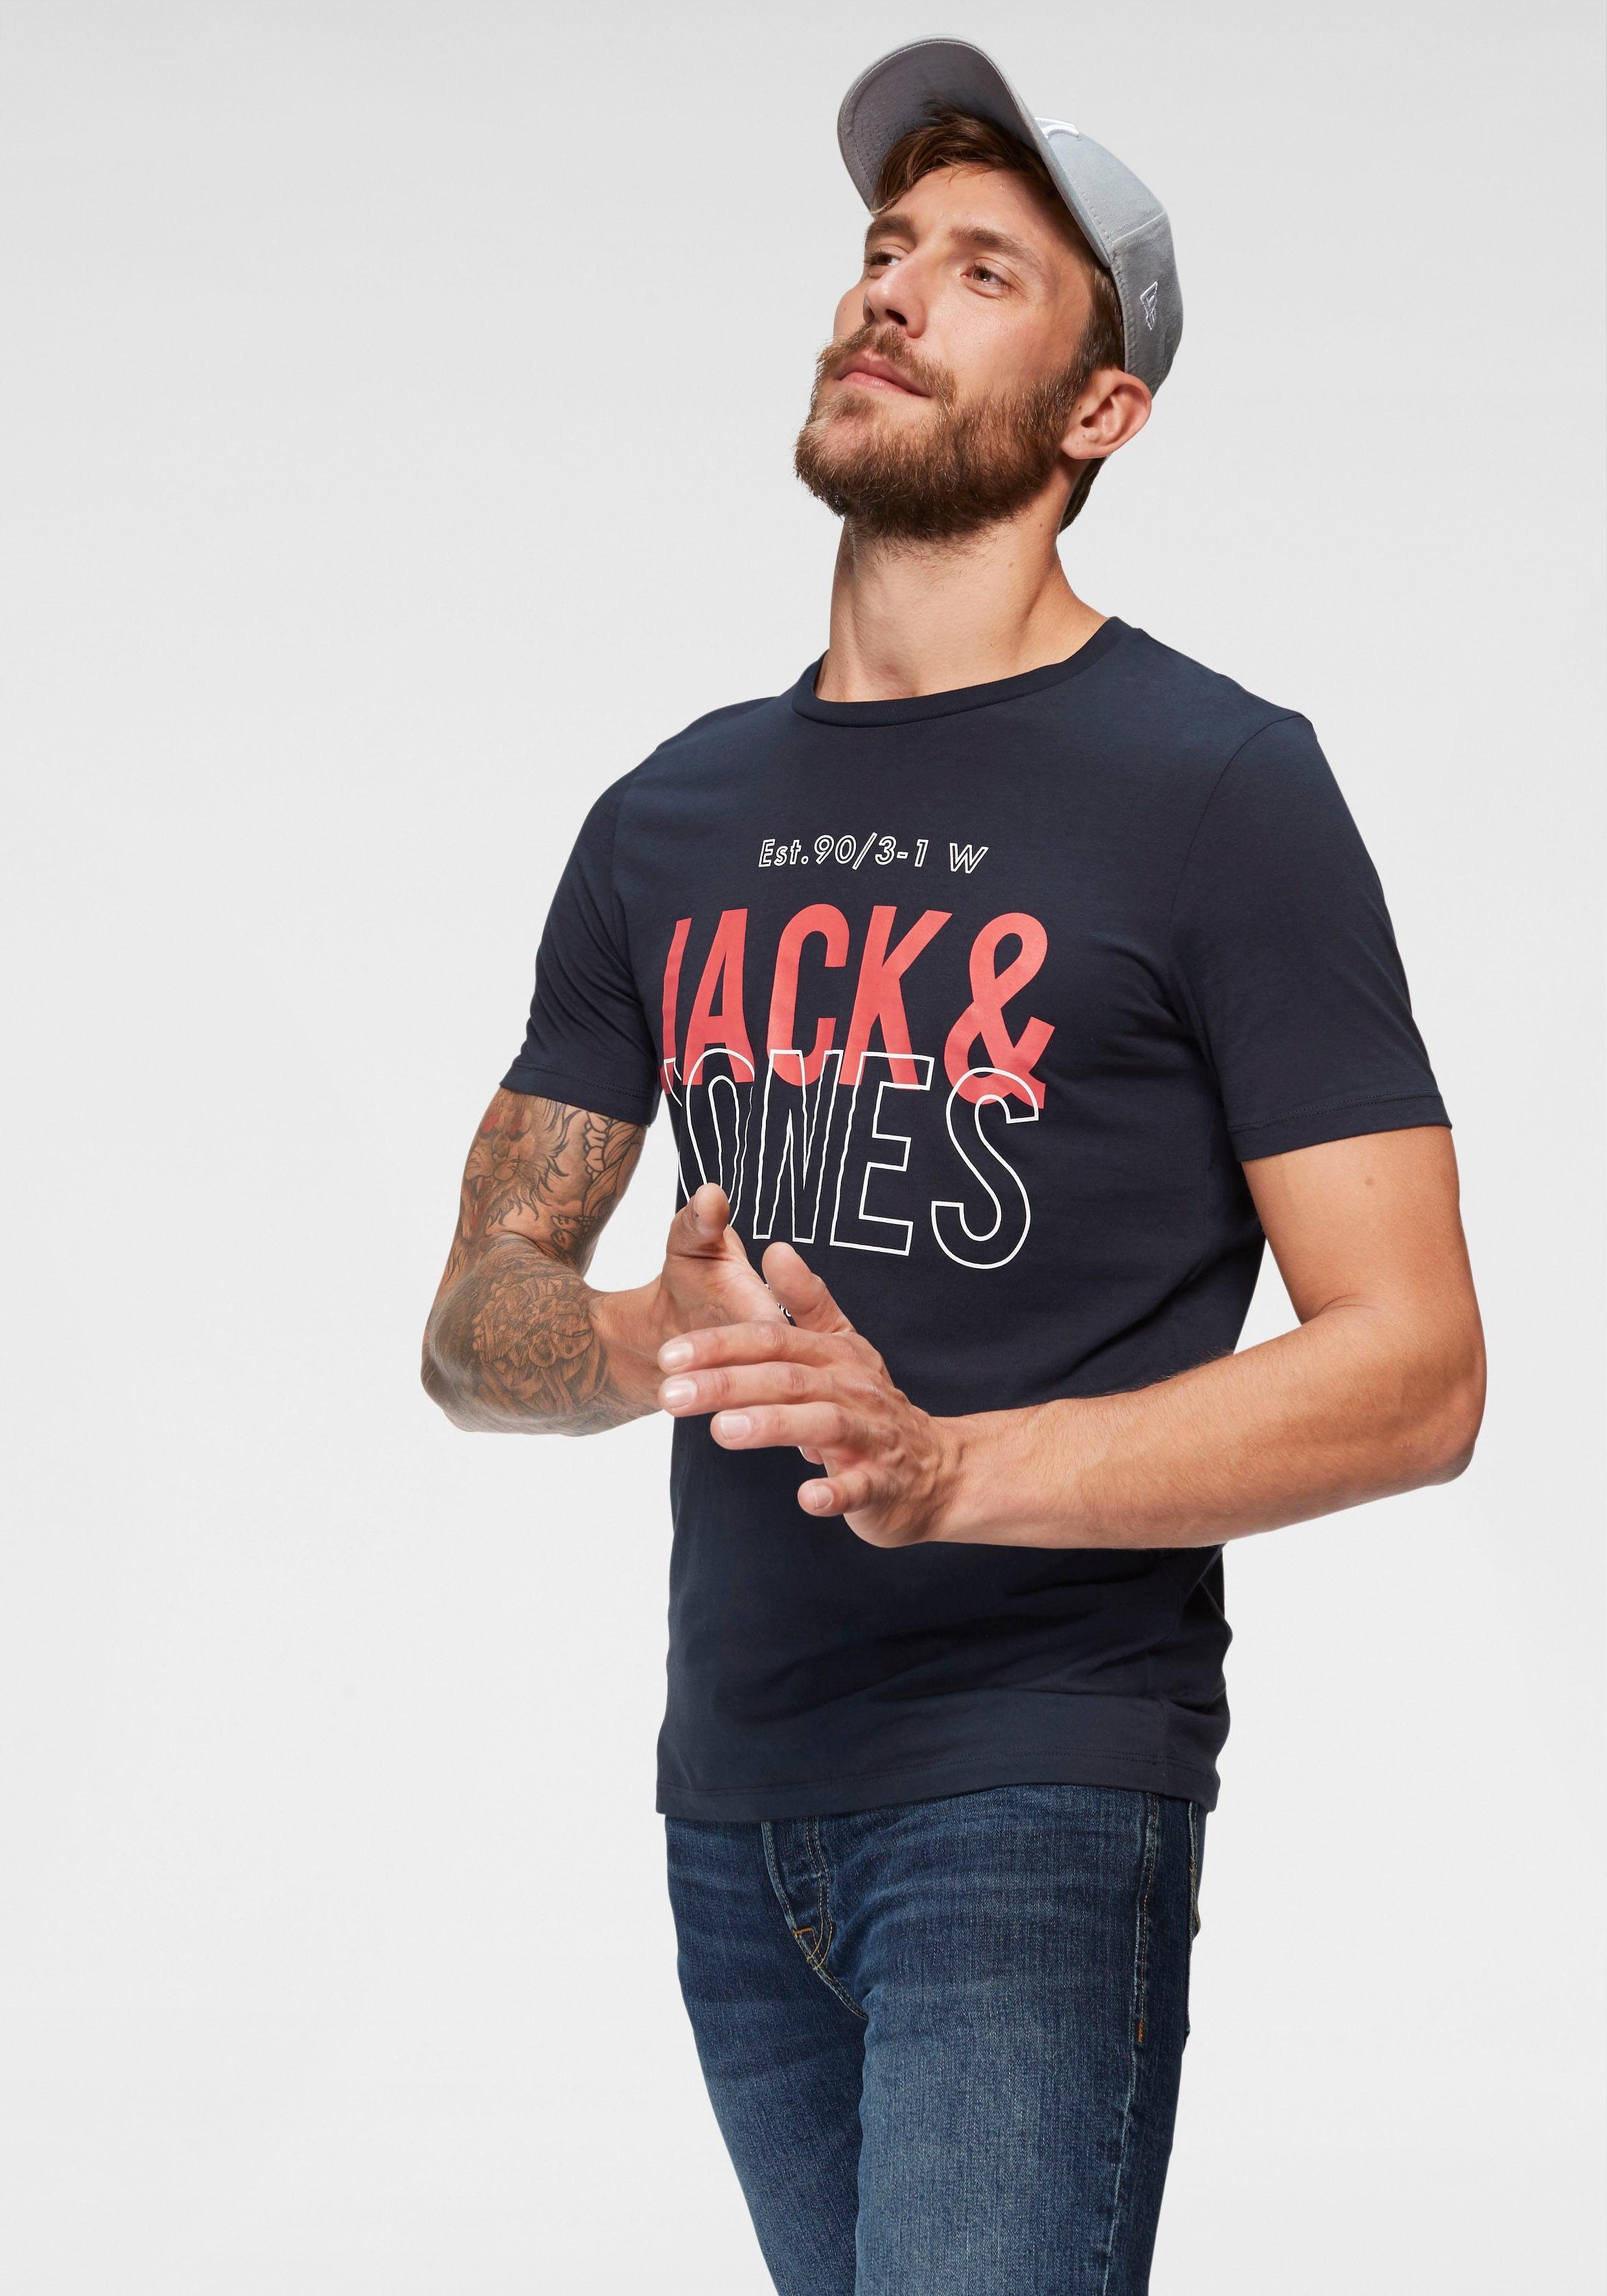 Jack & Jones Herren T-Shirt Print Shirt Regular oder Slim Fit Tee kurzarm Top 